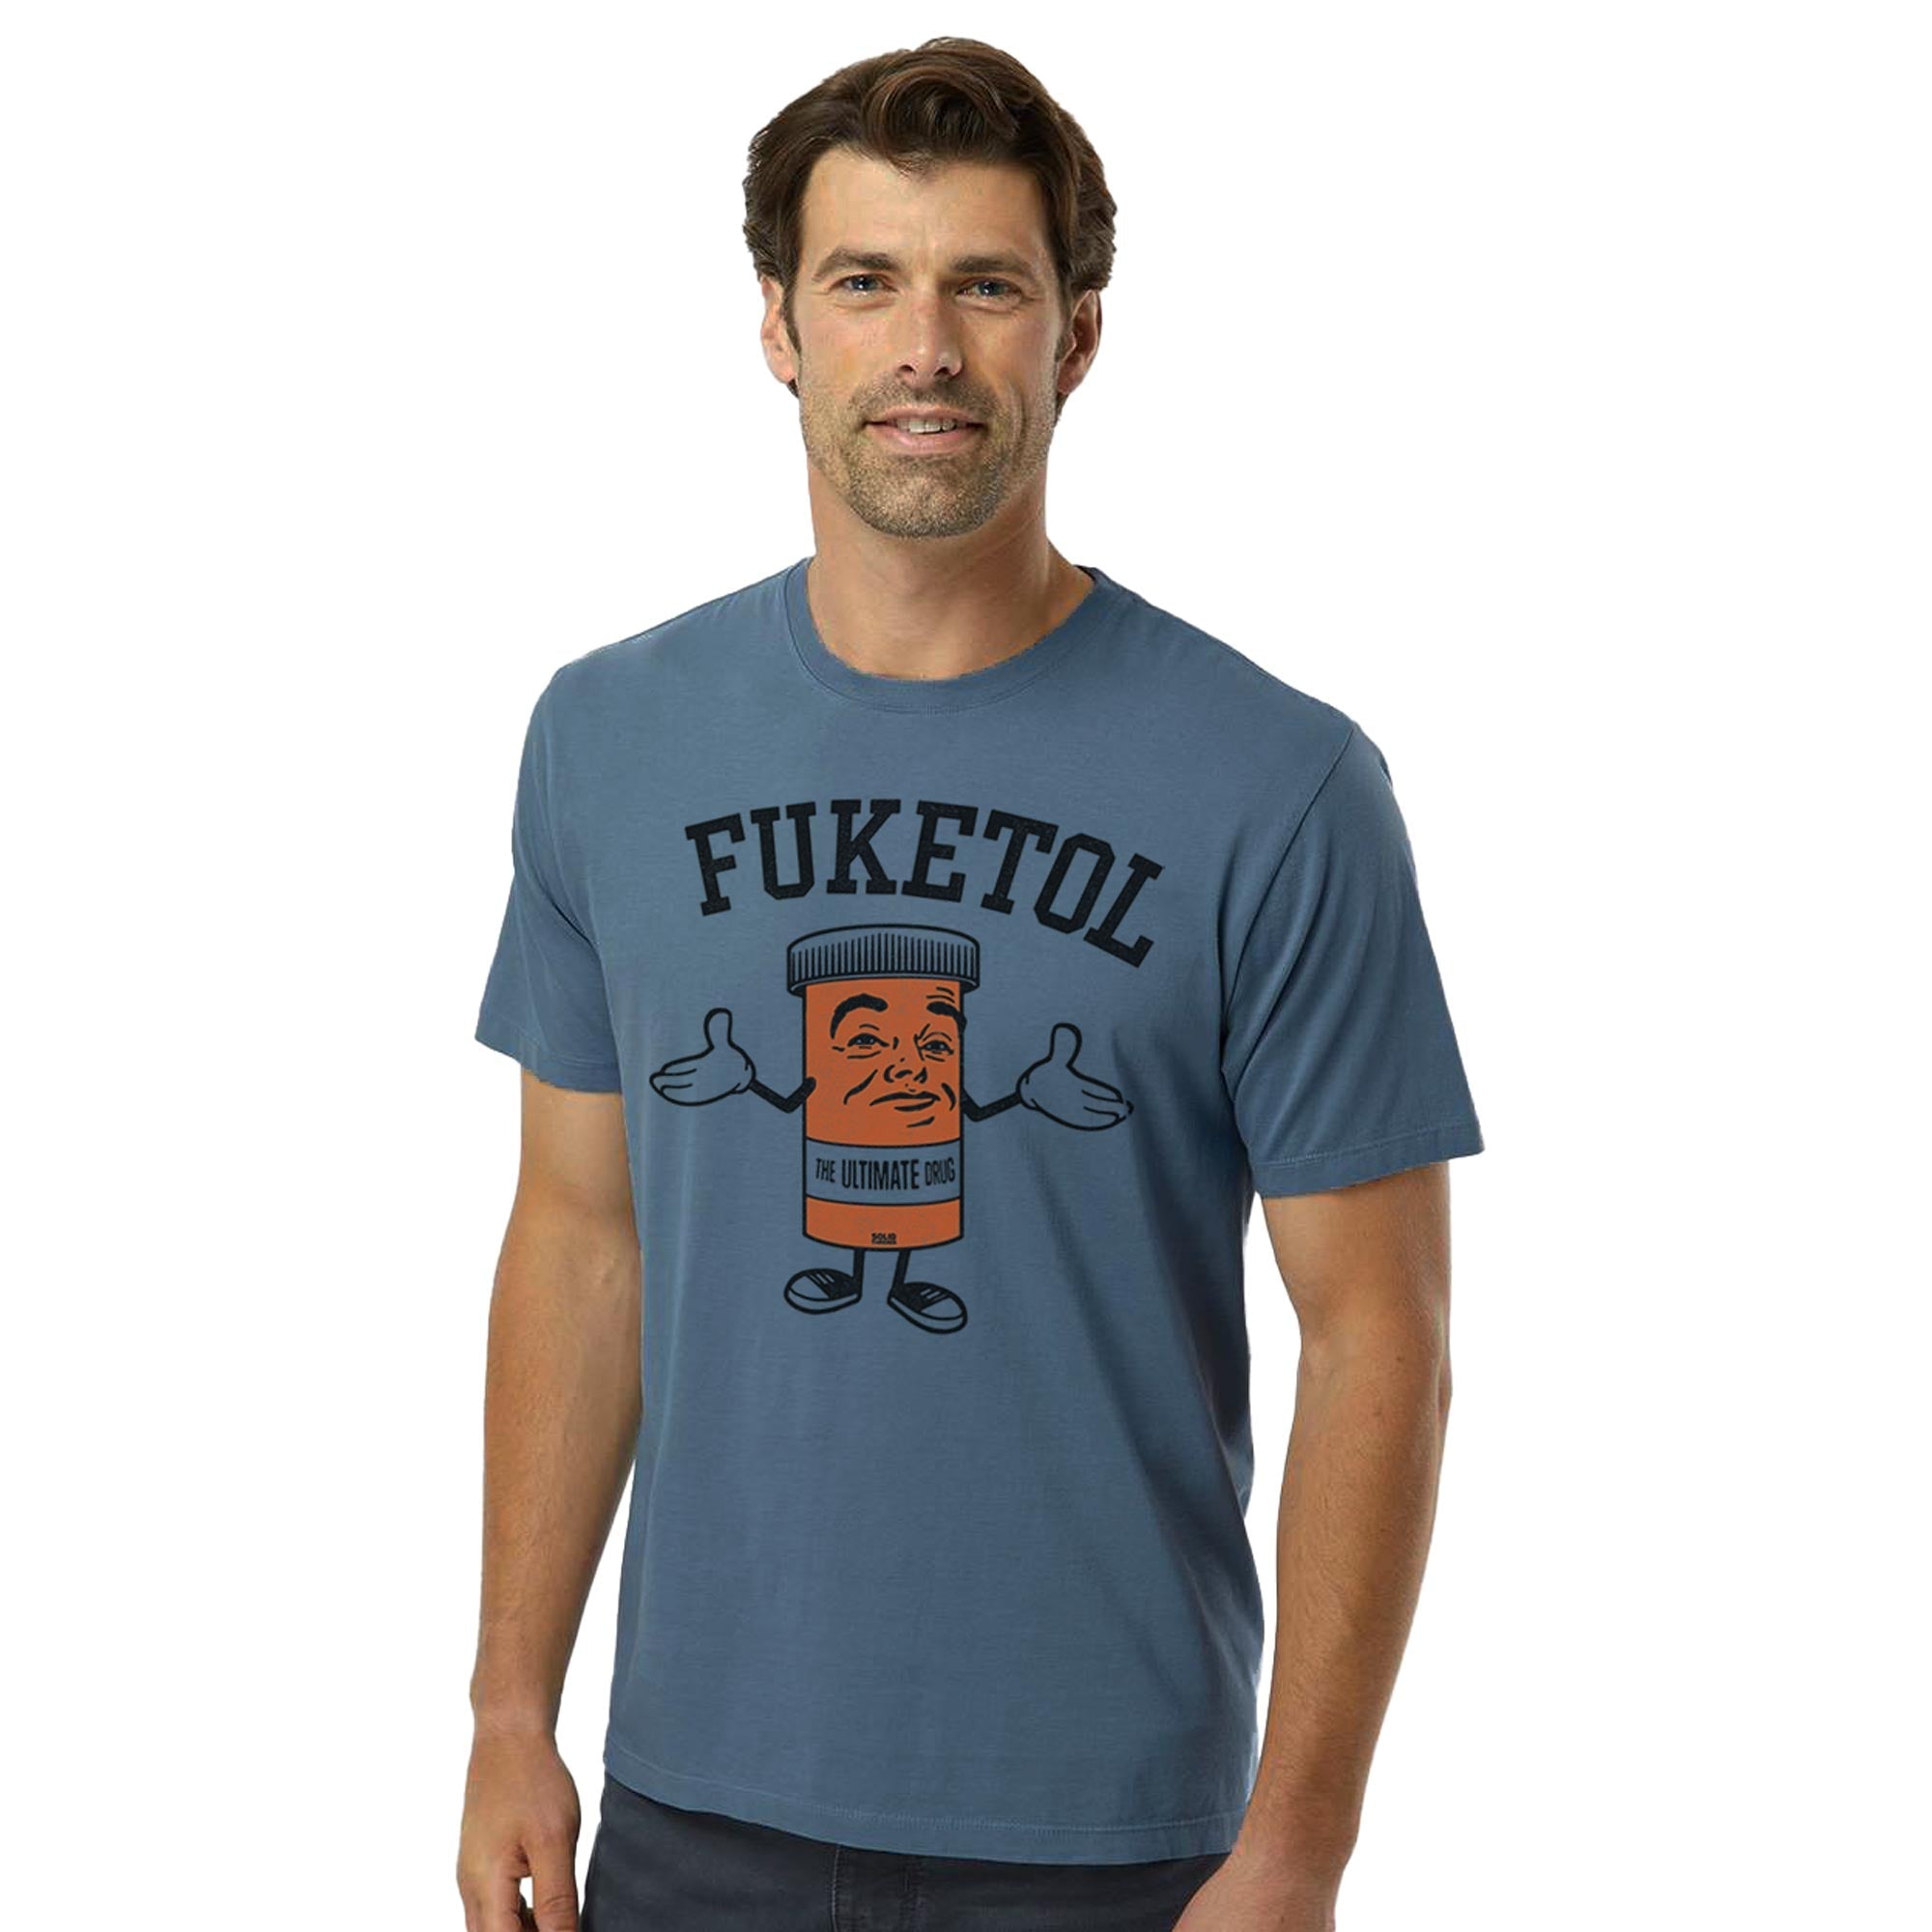 Fuketol Retro Organic Cotton T-shirt | Funny Pill Bottle  Tee | Solid Threads